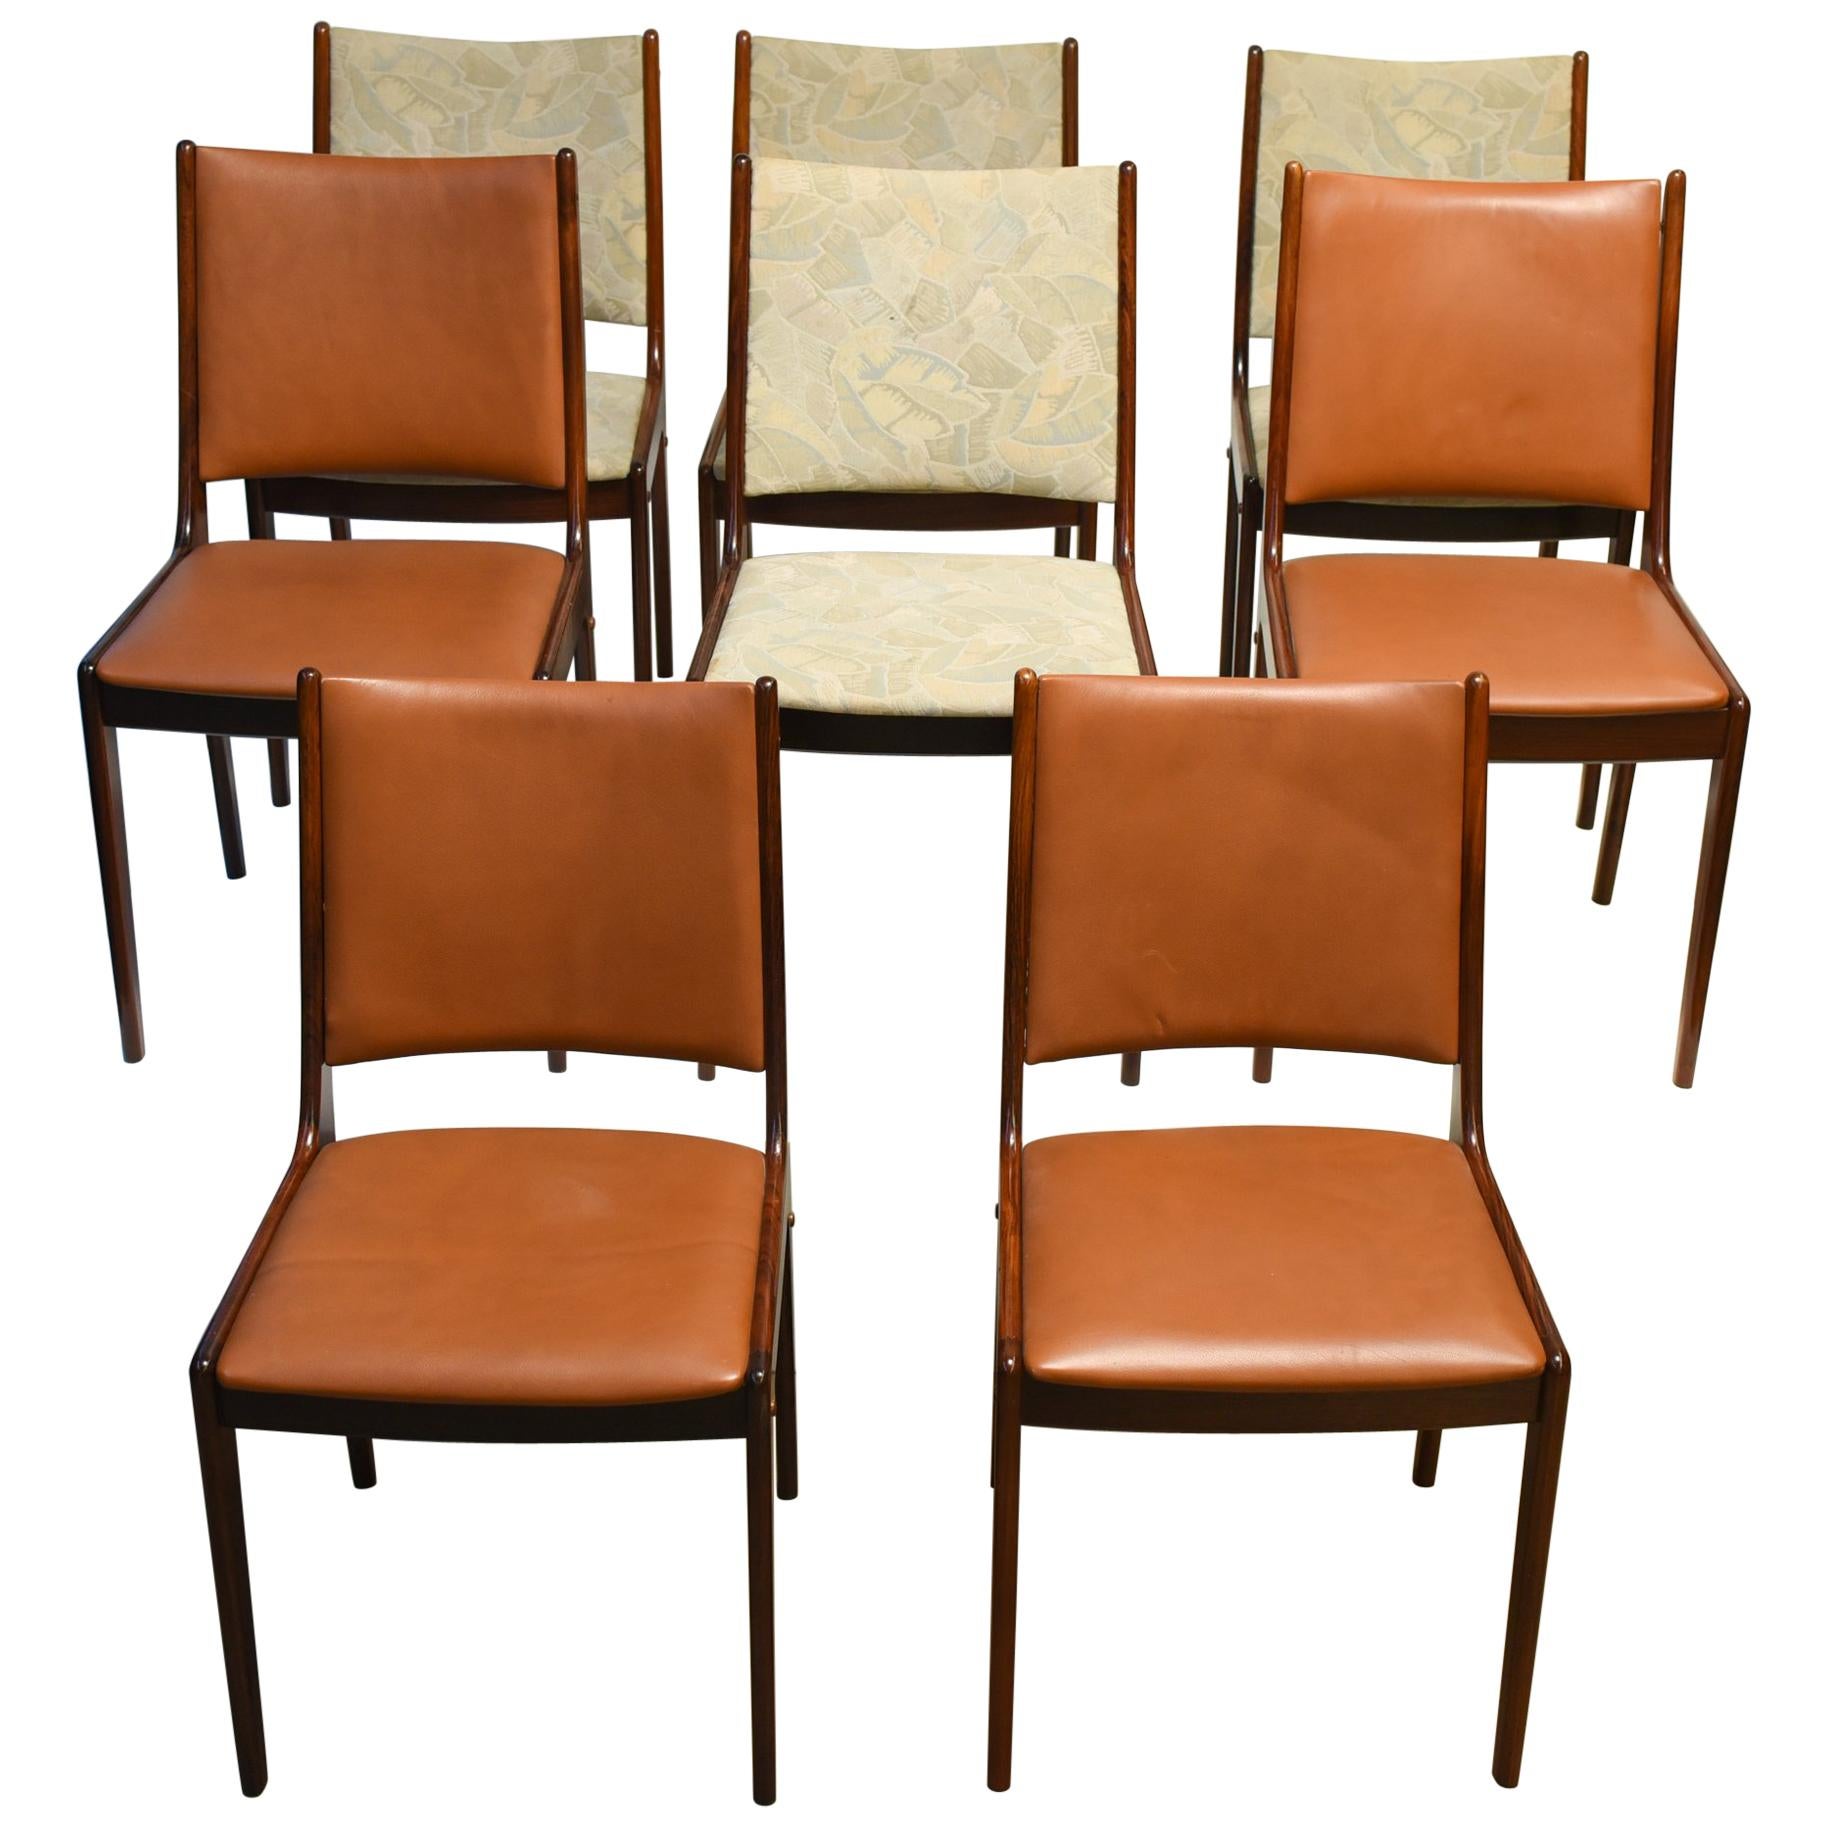 Mid Century Scandinavian Dining rosewood, Chairs, 1960s